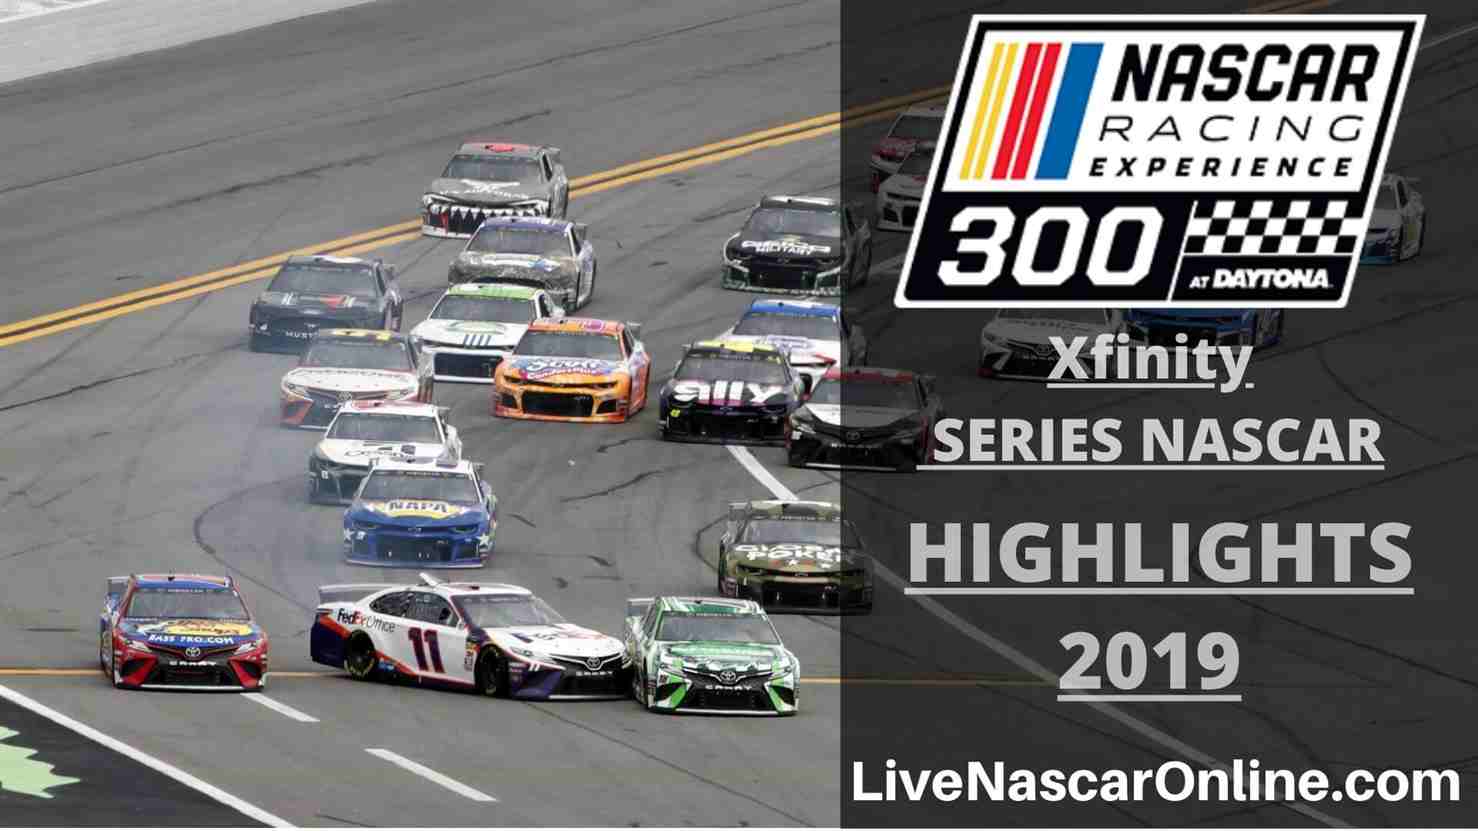 NASCAR XFINITY SERIES EXPERIENCE 300 HIGHLIGHTS 2019 Online